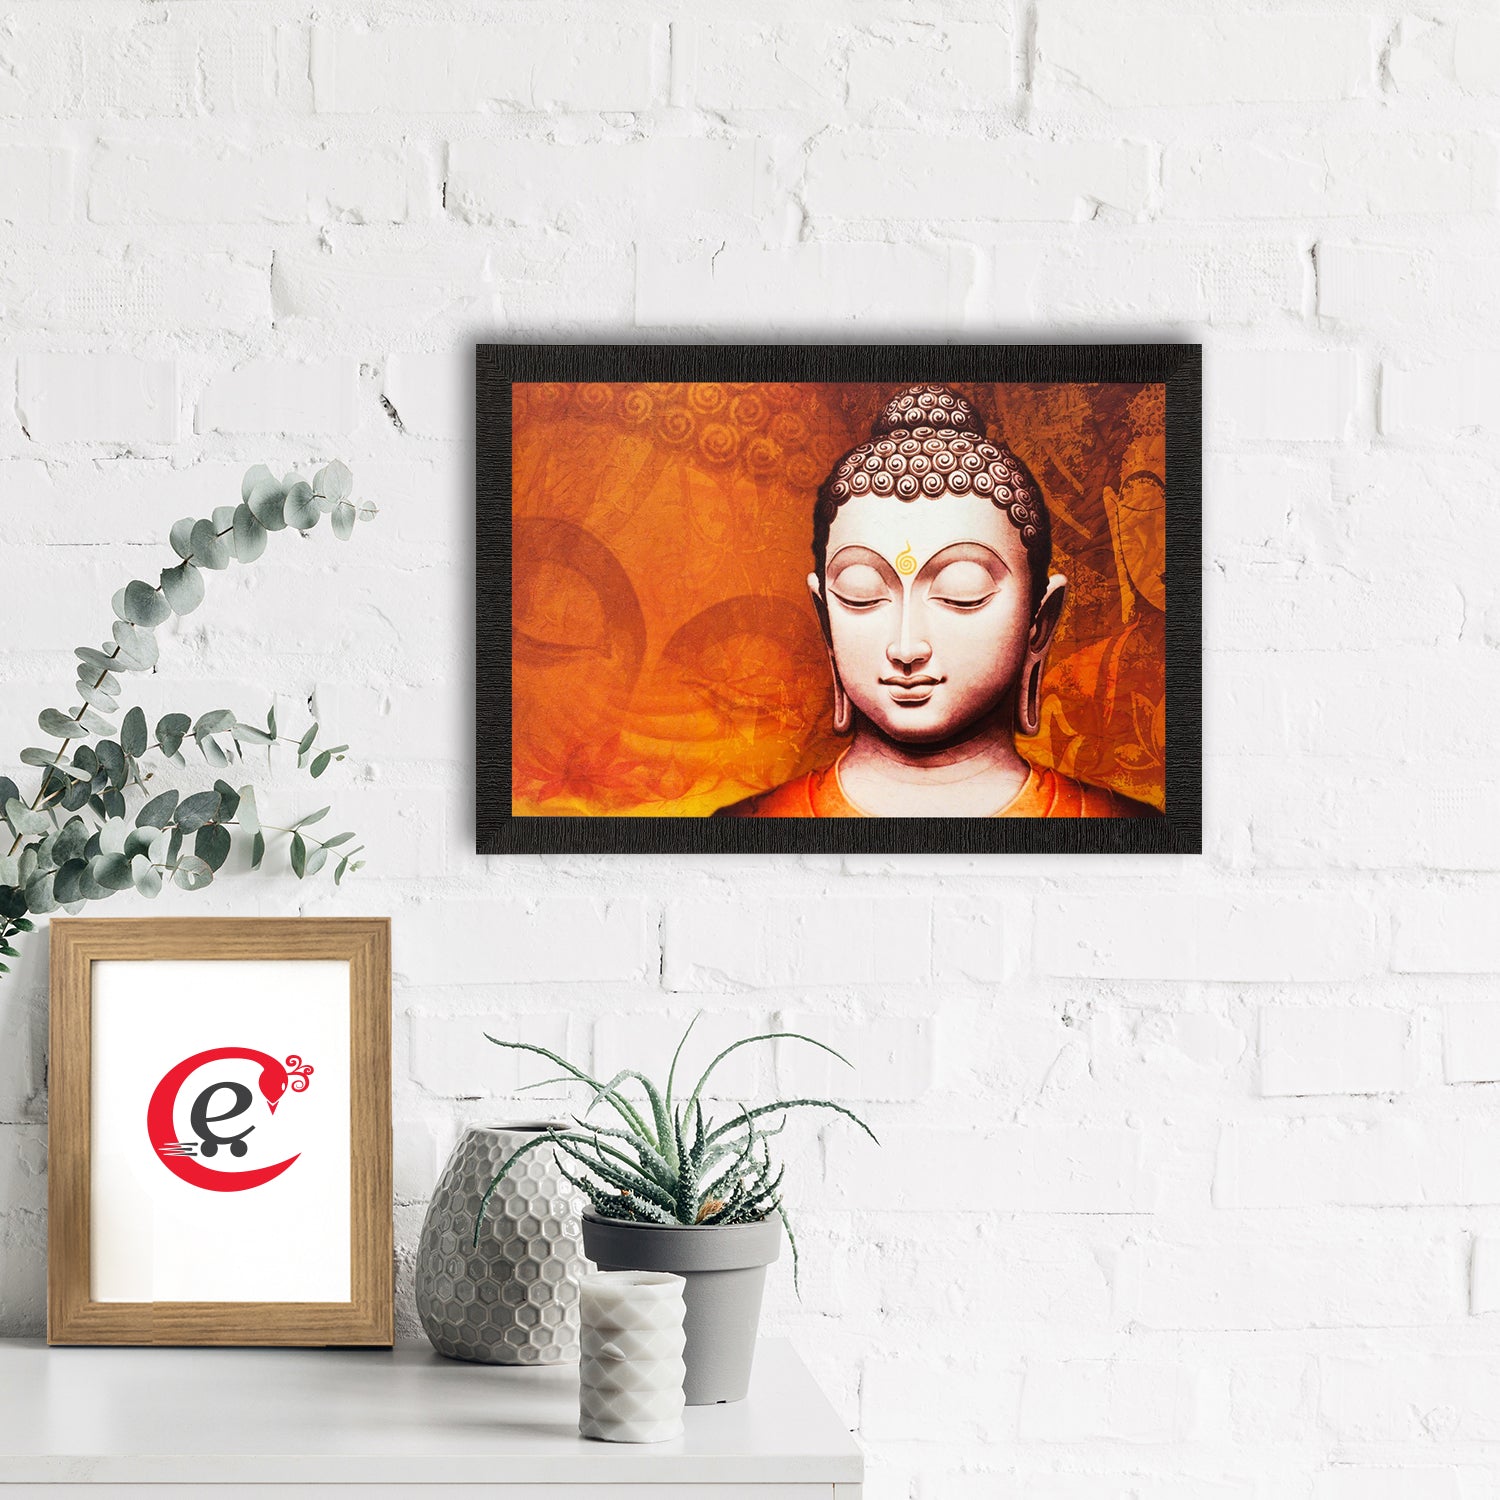 Meditating Buddha Painting Digital Printed Religious Wall Art 1